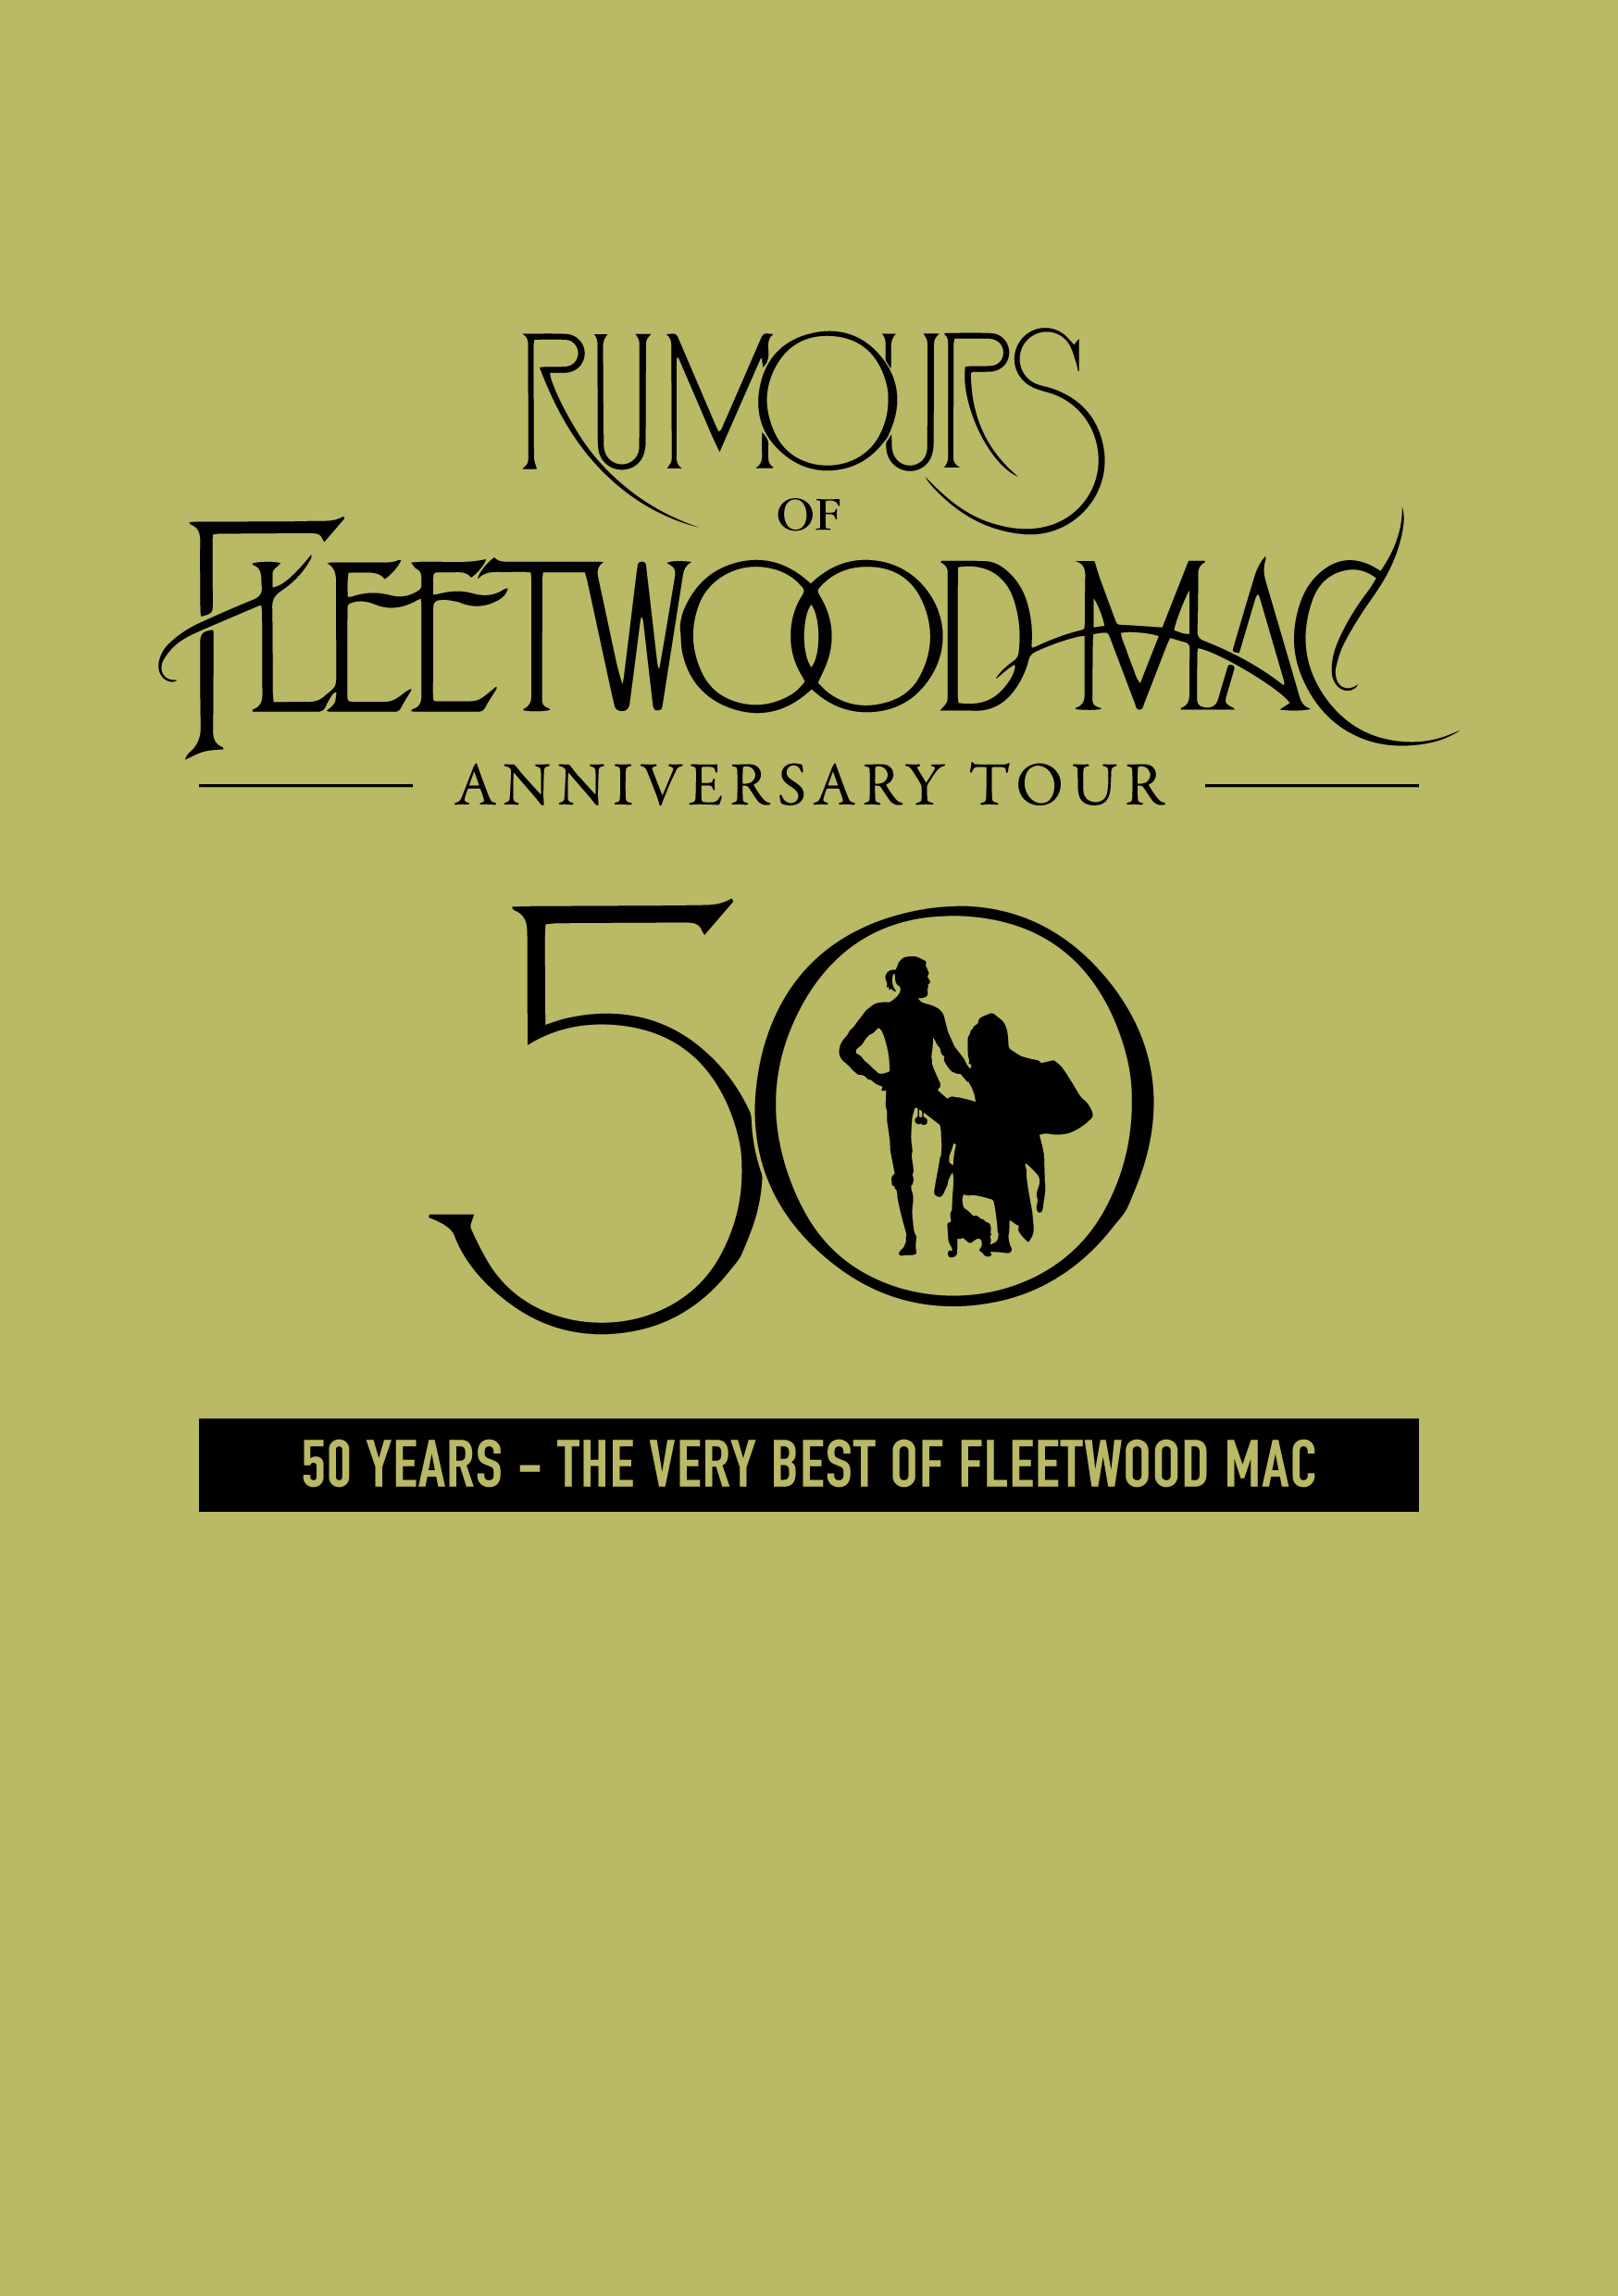 Rumours Of Fleetwood Mac Tour 2019